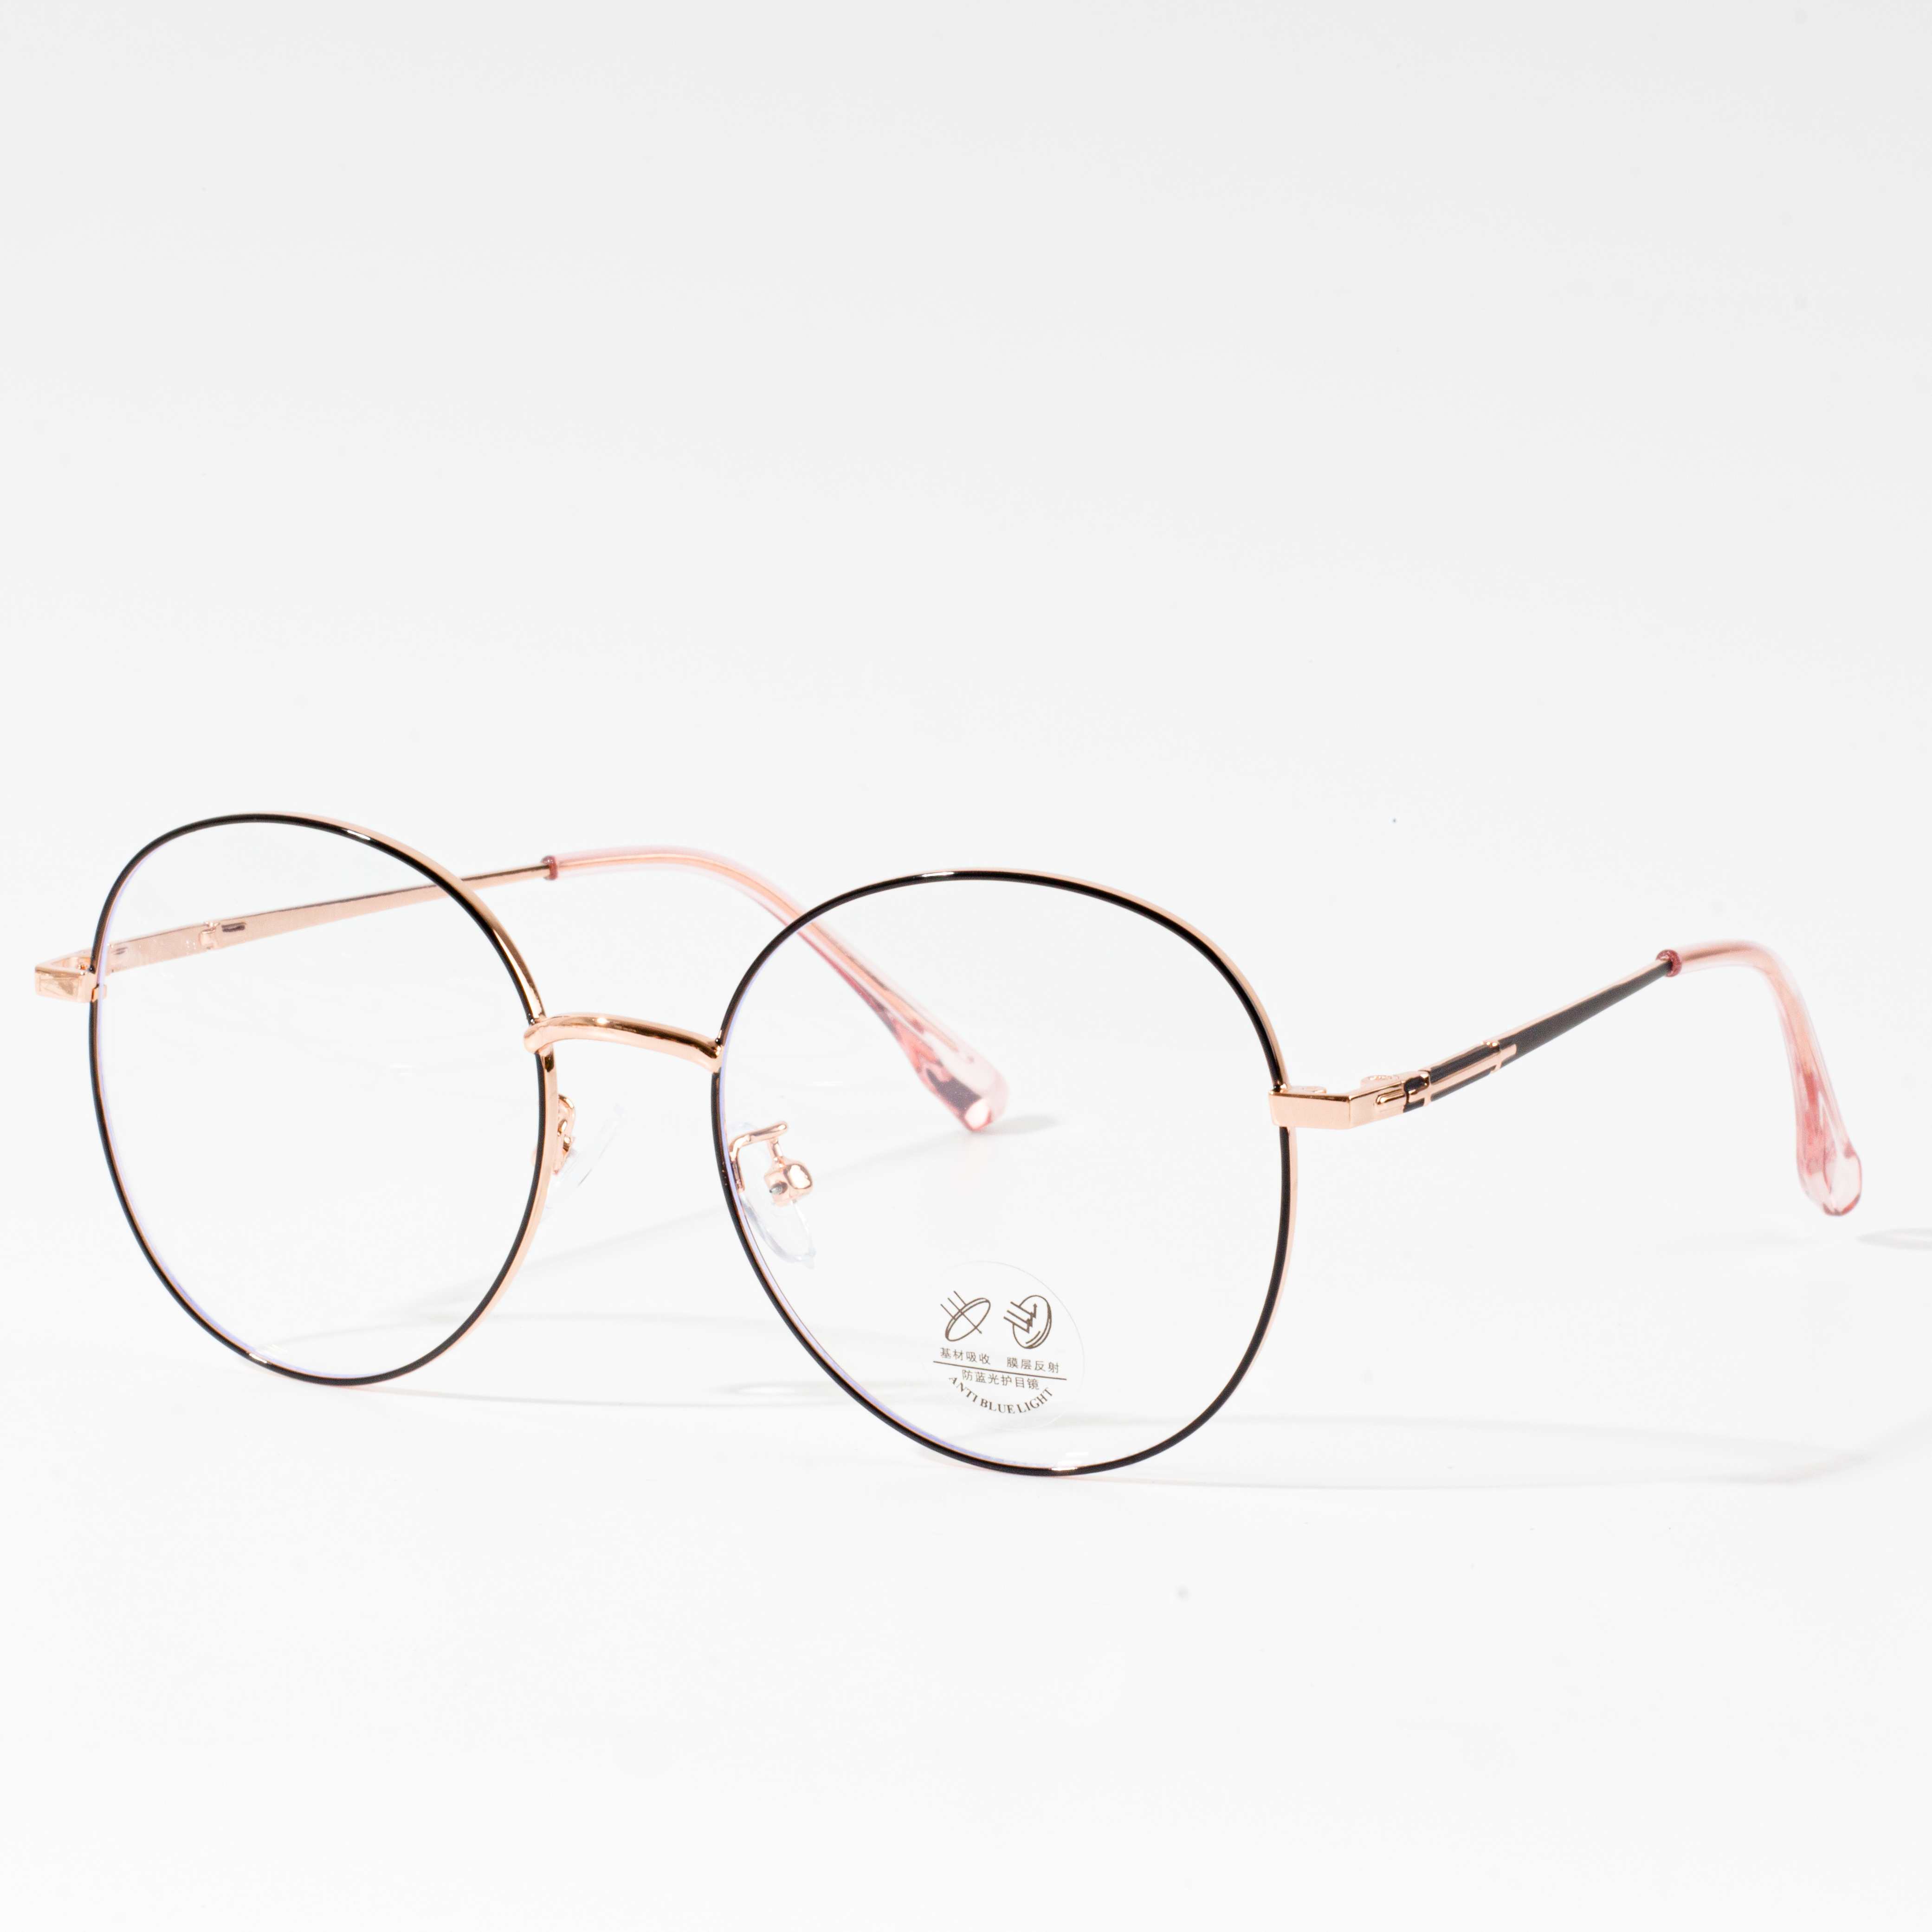 picculi montature per occhiali tondi